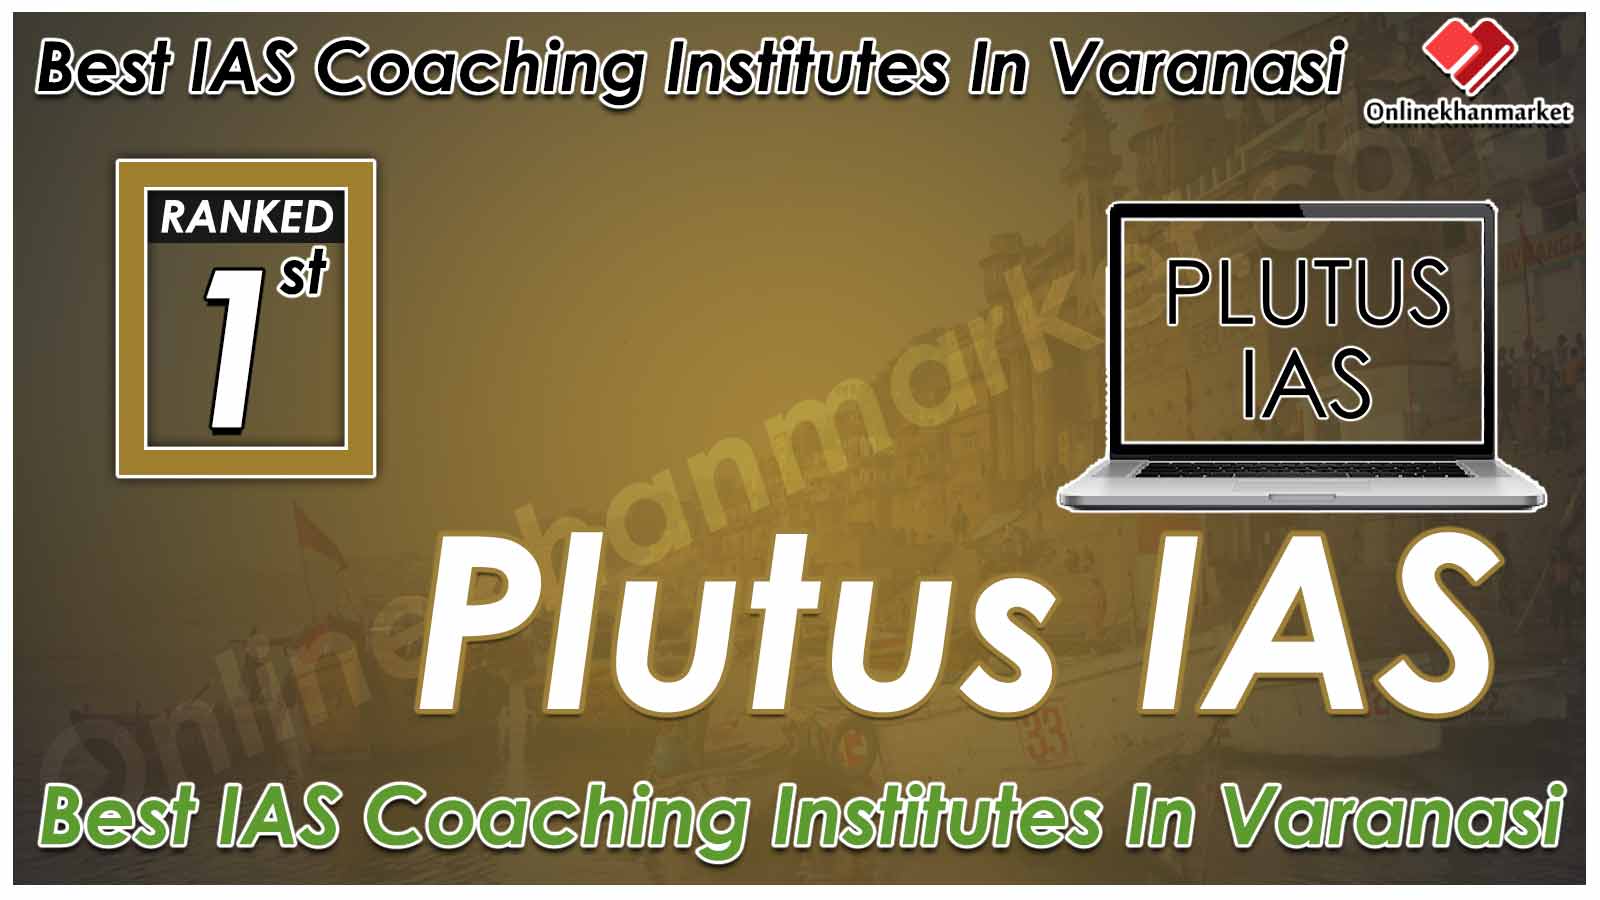 Best IAS Coaching in Varanasi